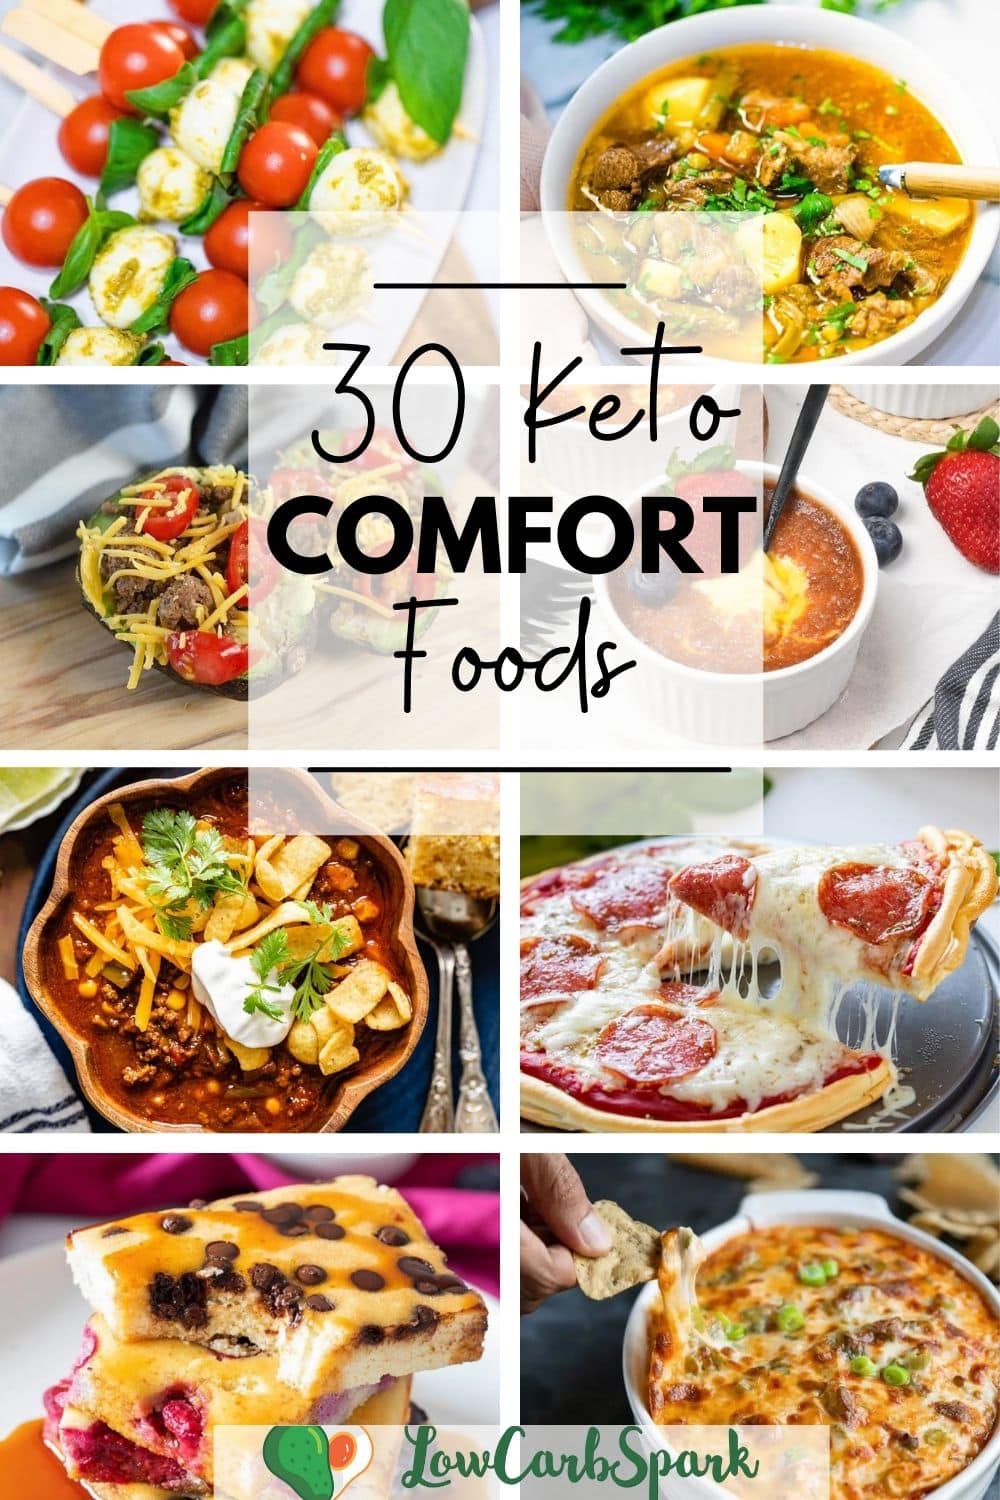 keto comfort foods recipes